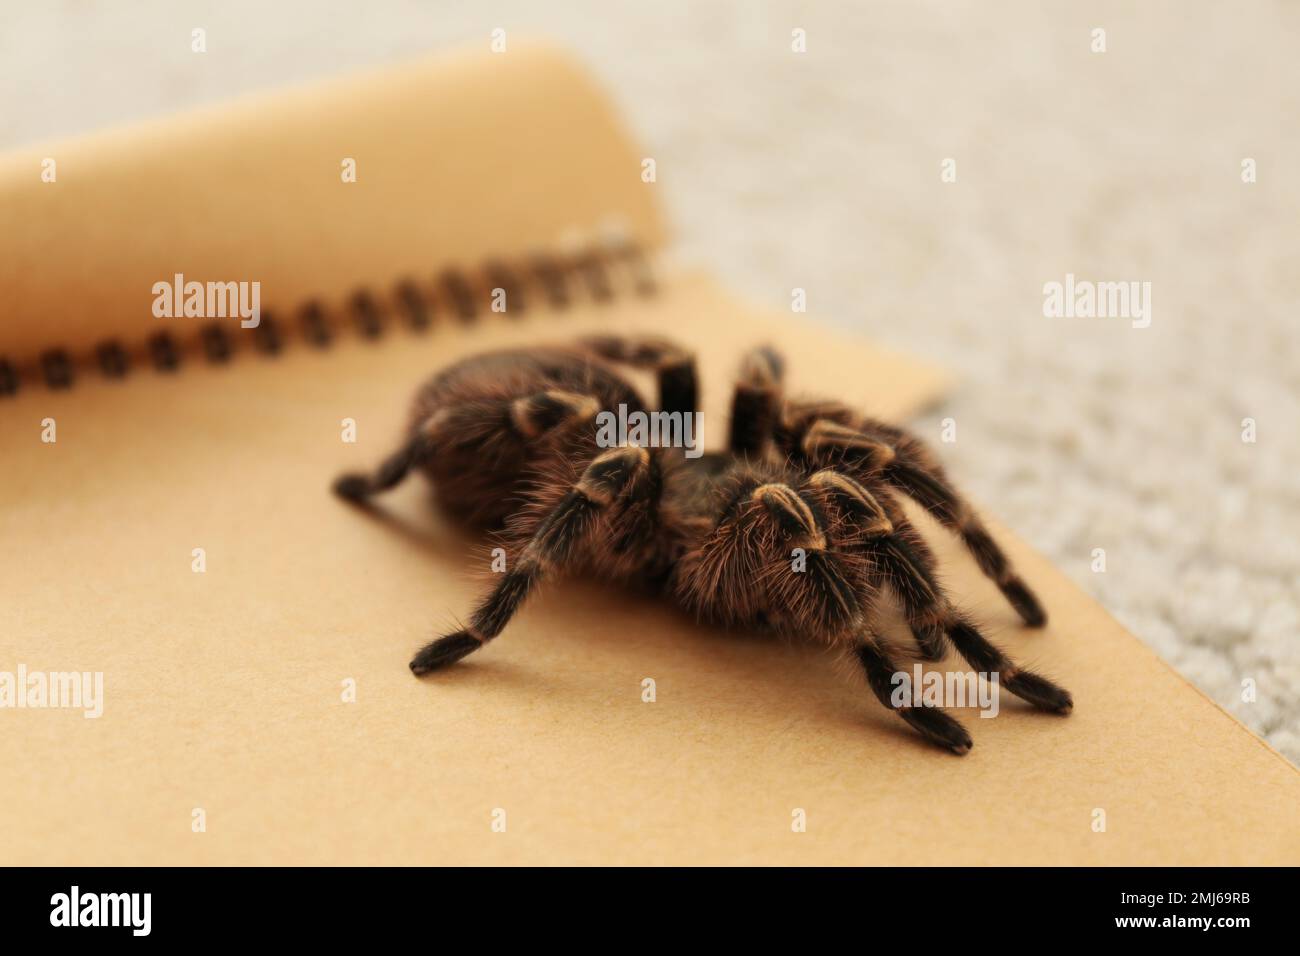 Striped knee tarantula (Aphonopelma seemanni) on notebook indoors, closeup Stock Photo